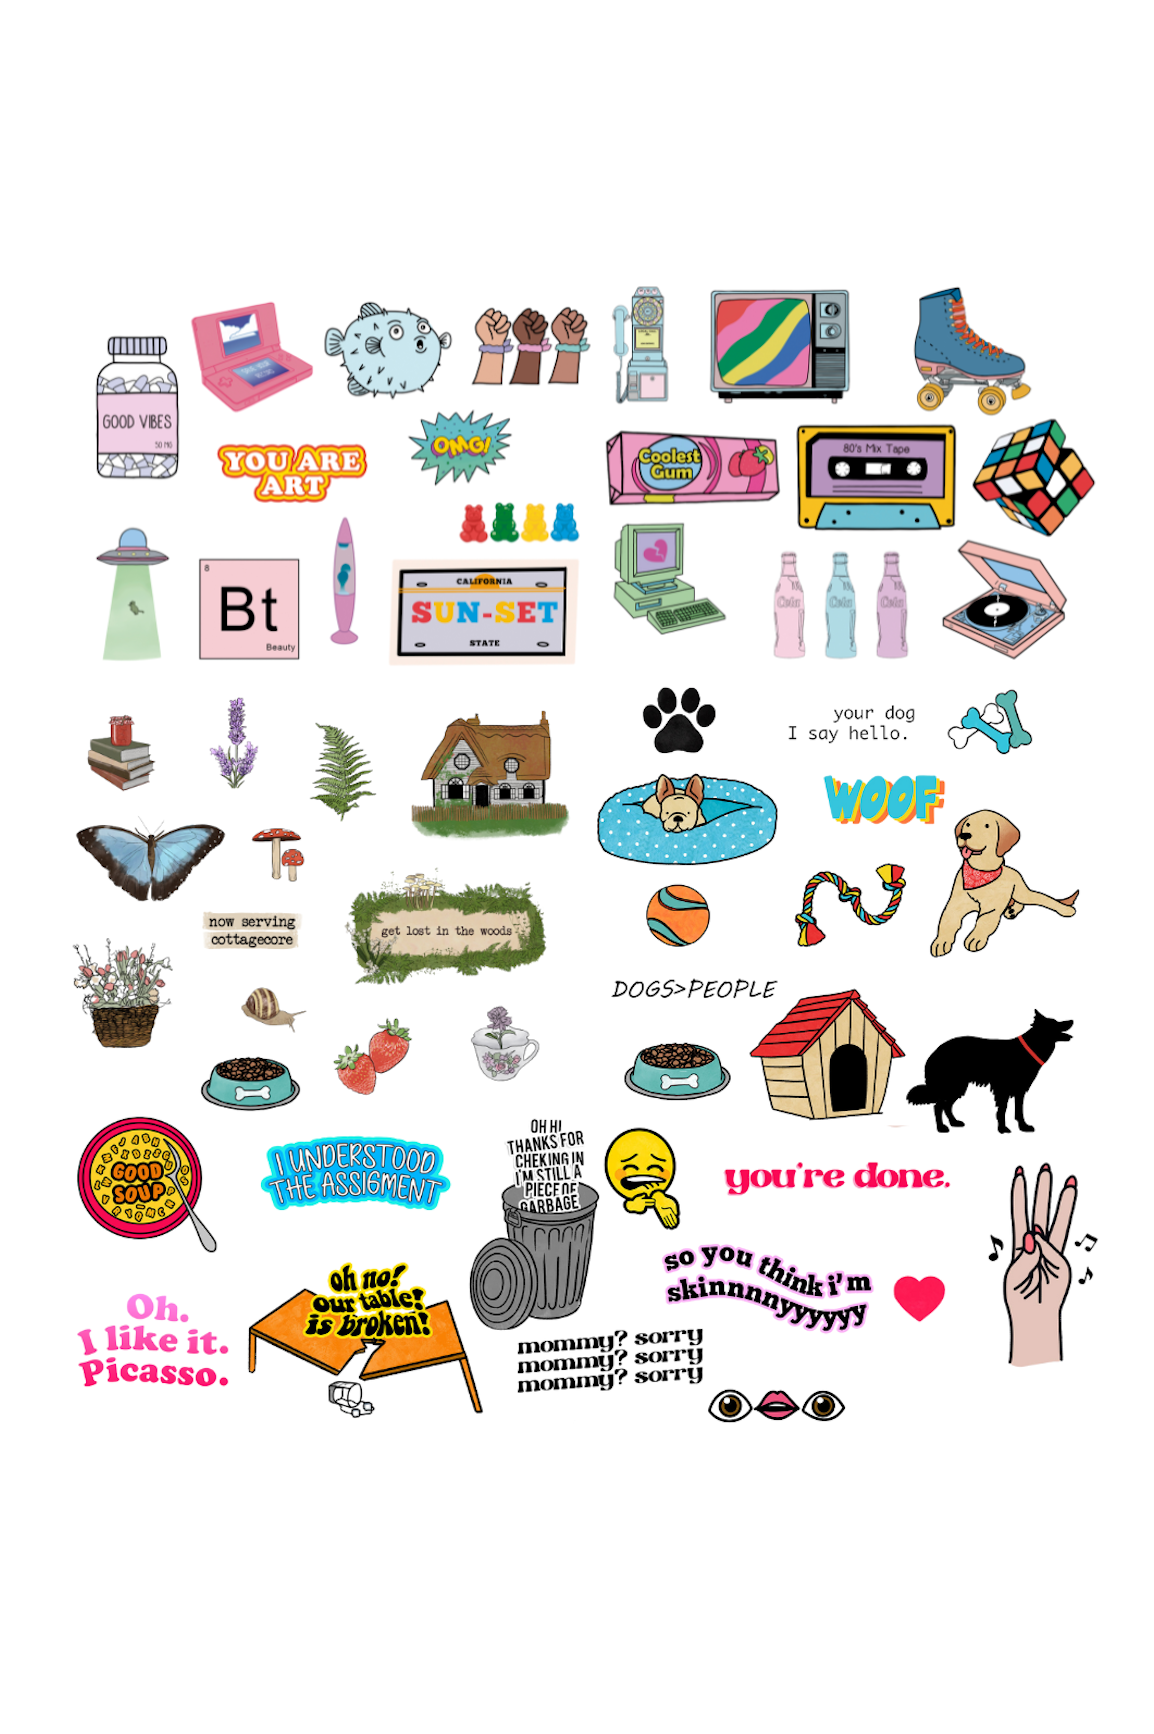 sticker set bundle consisting of 5 different sticker sets